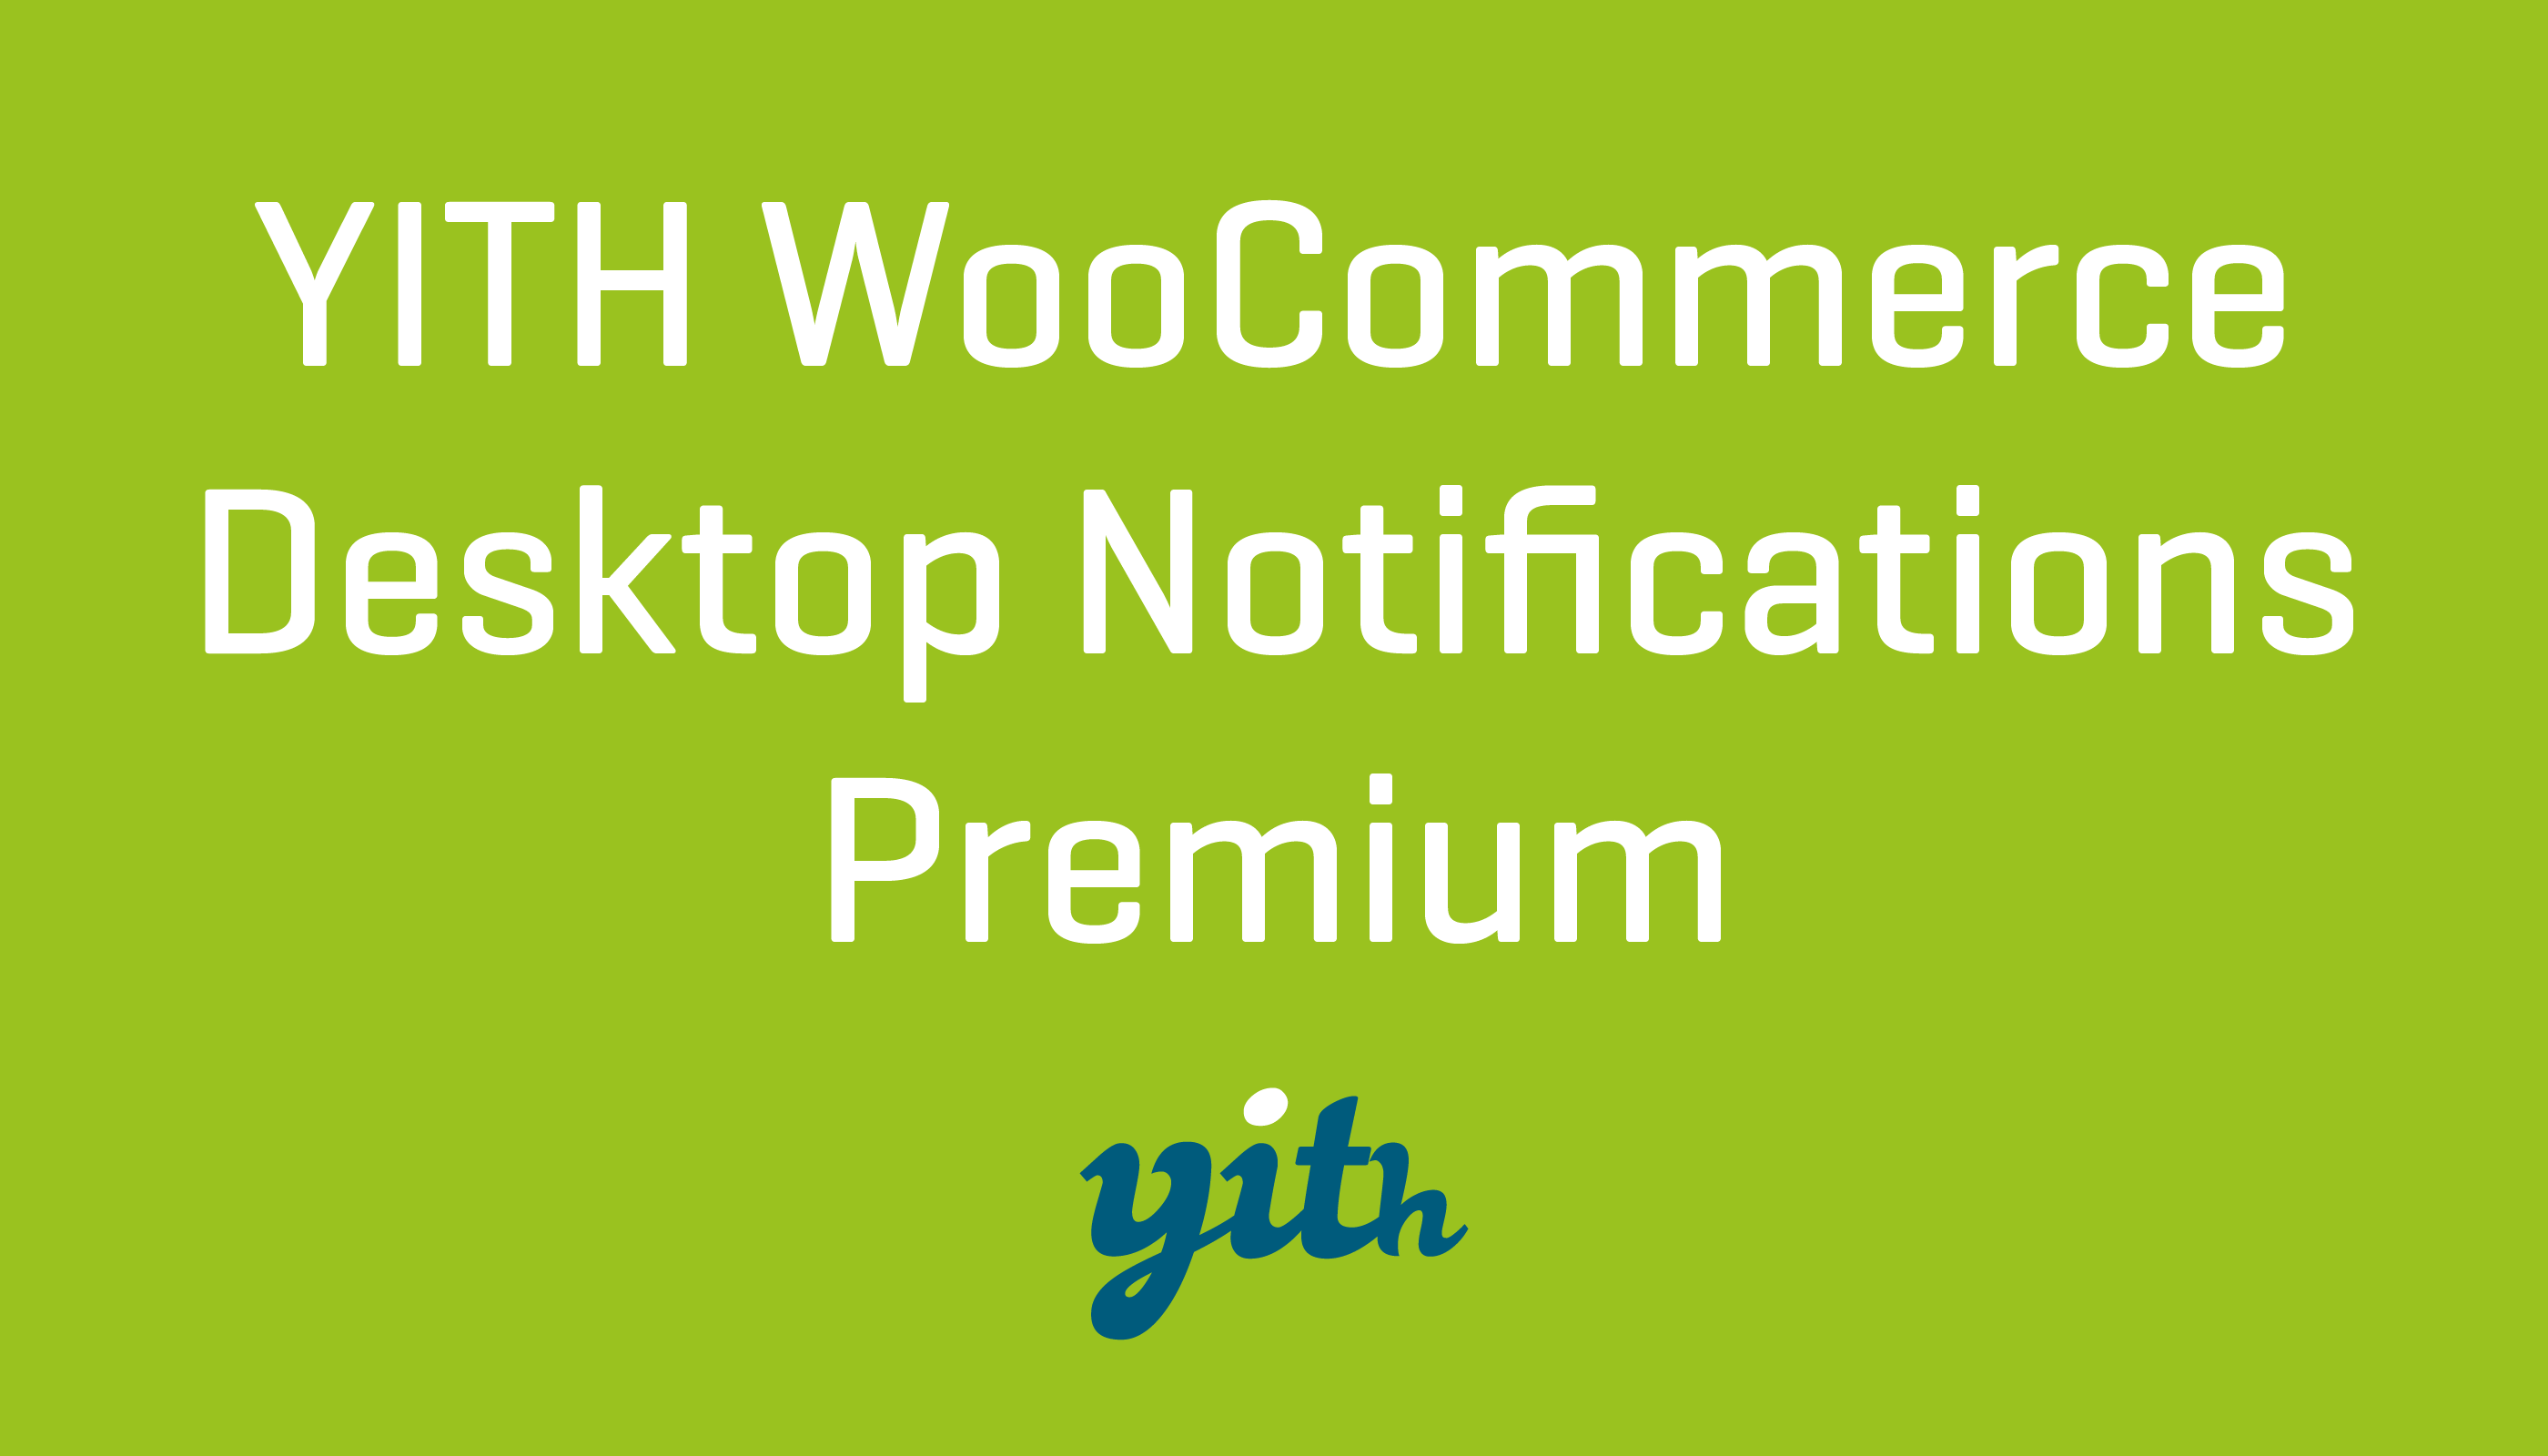 YITH WooCommerce Desktop Notifications Premium